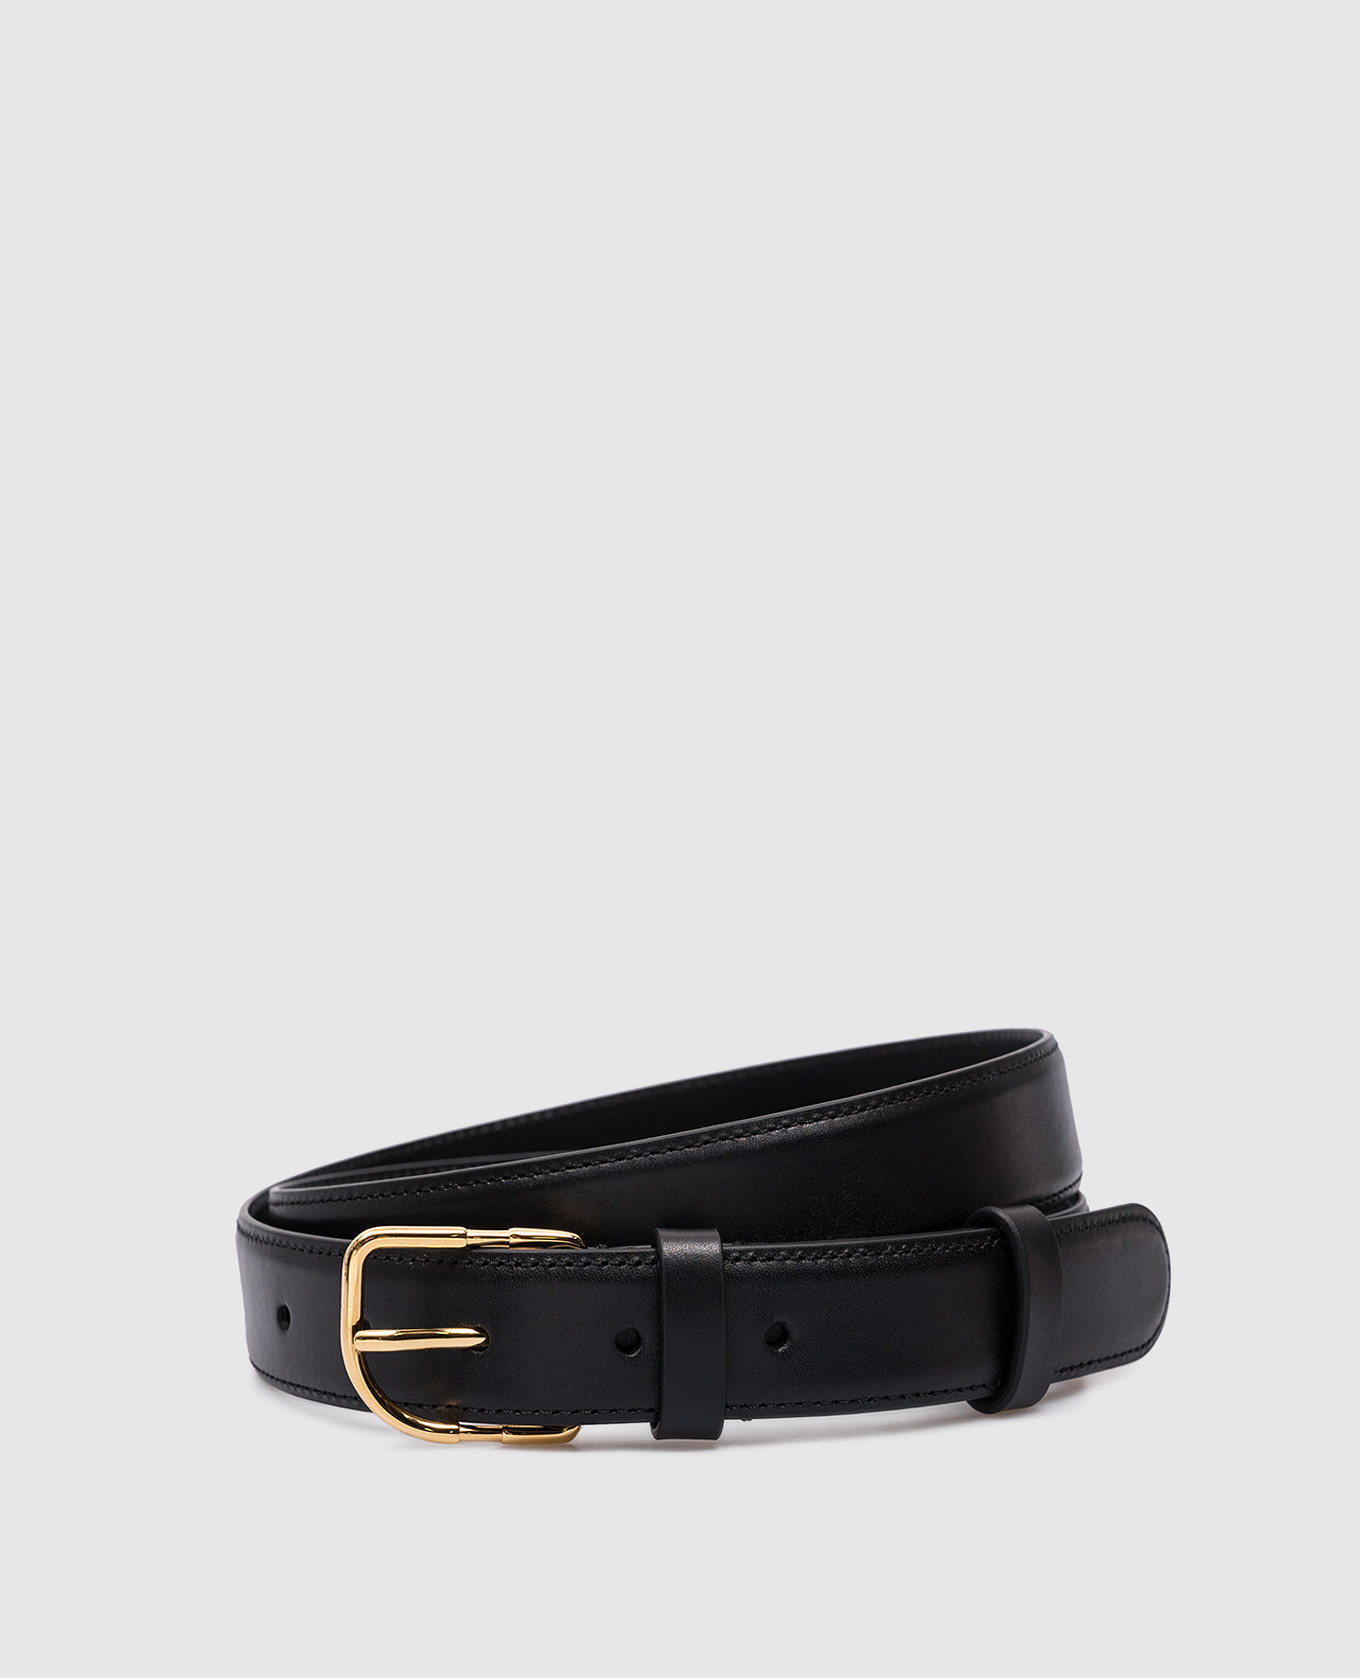 Caspian black leather belt